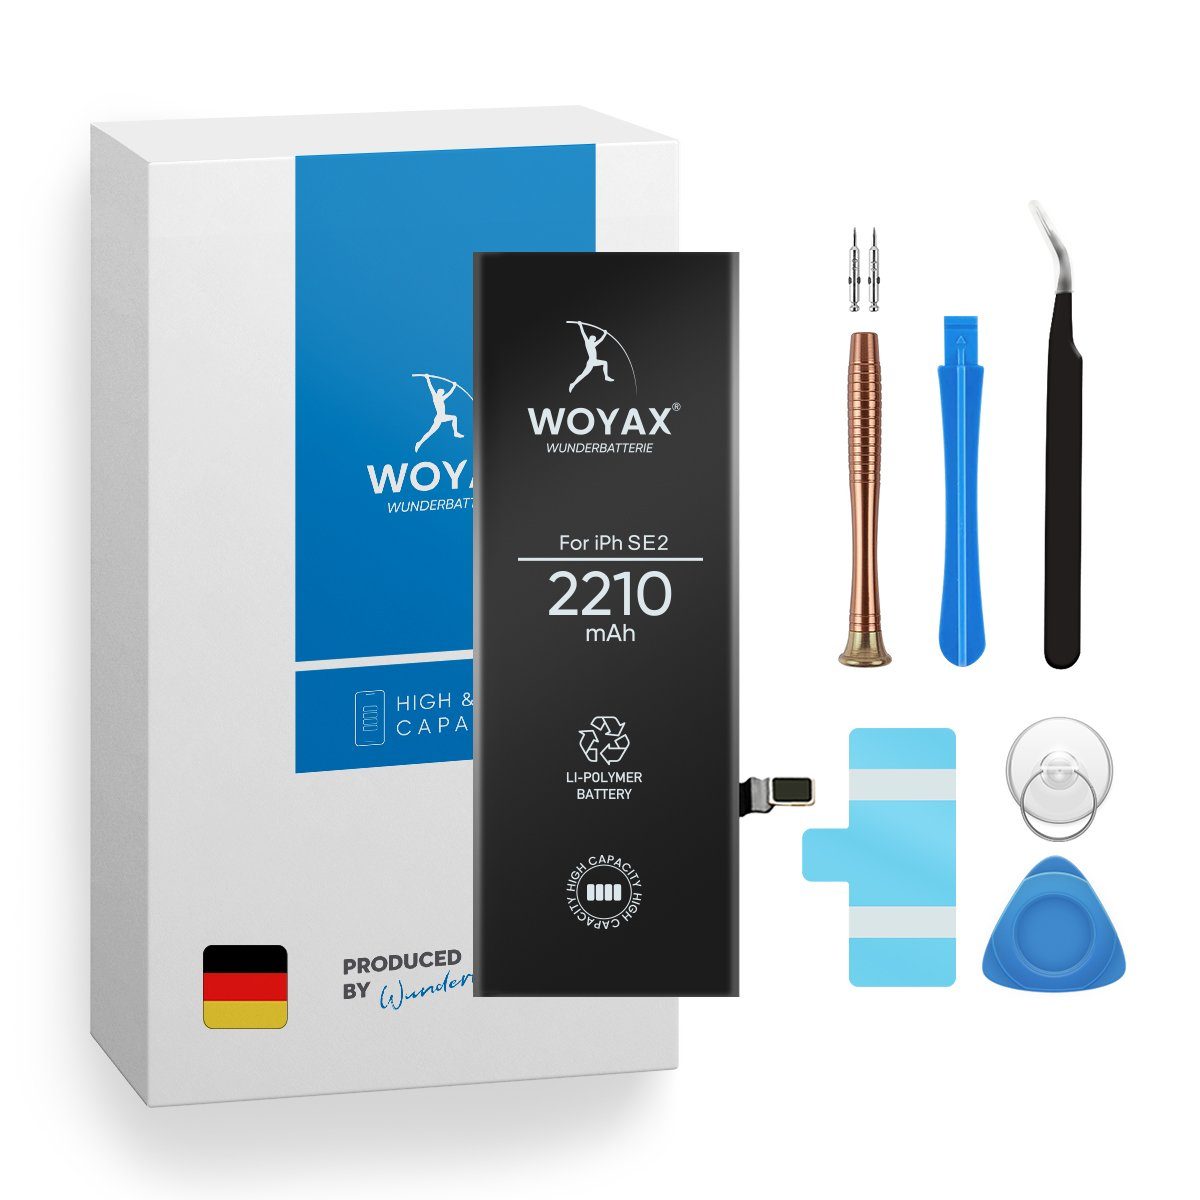 Woyax Wunderbatterie Akku für iPhone SE 2020 / 2210mAh Hohe Kapazität Handy-Akku